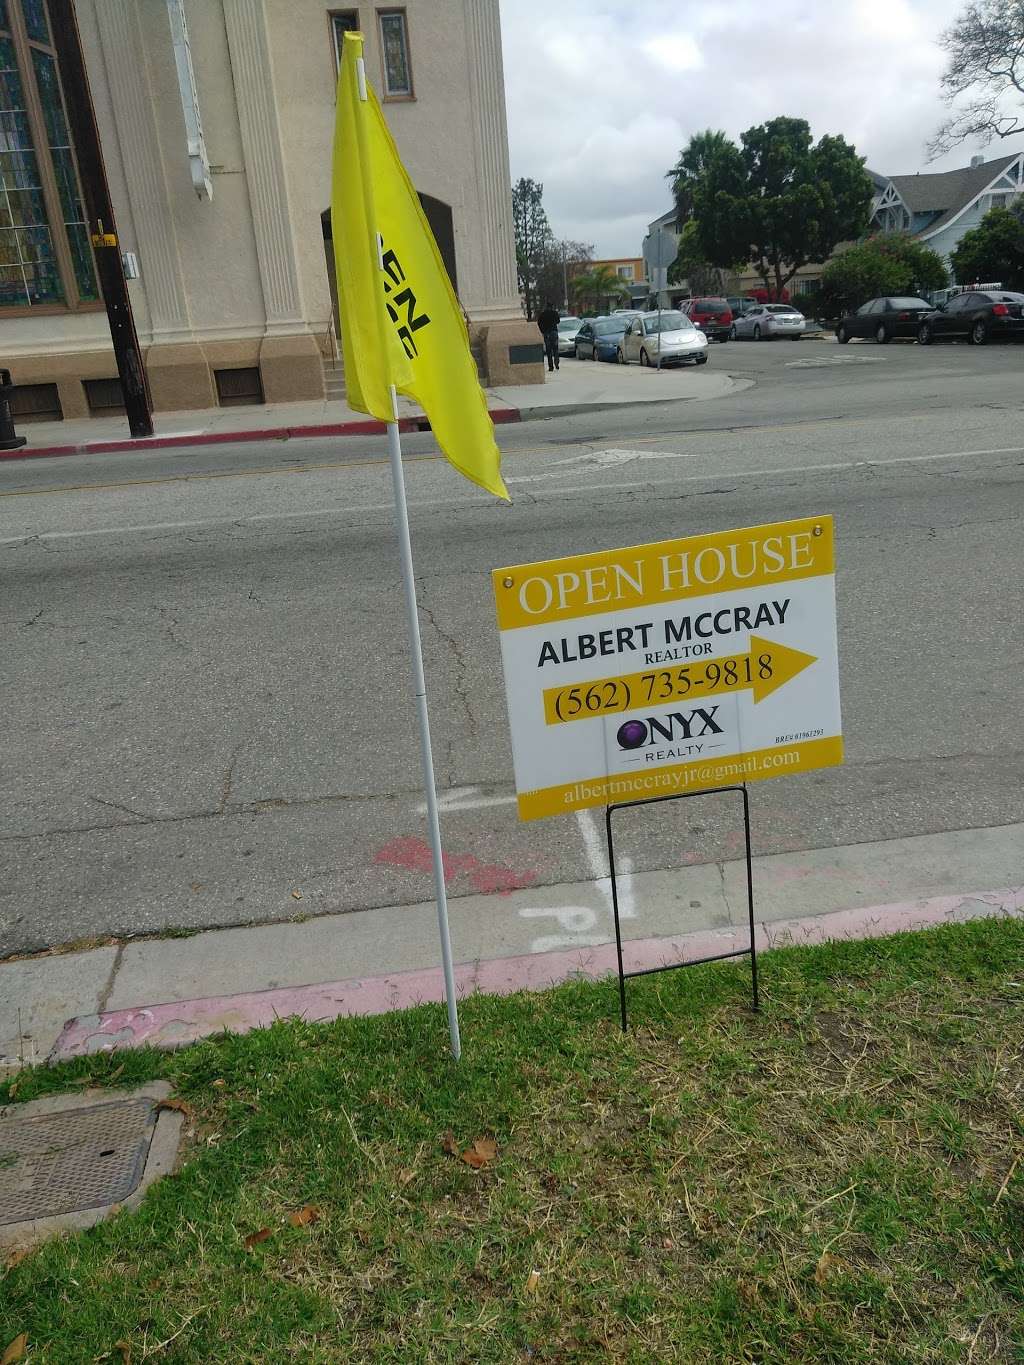 Tenth & Olive SE | Long Beach, CA 90813